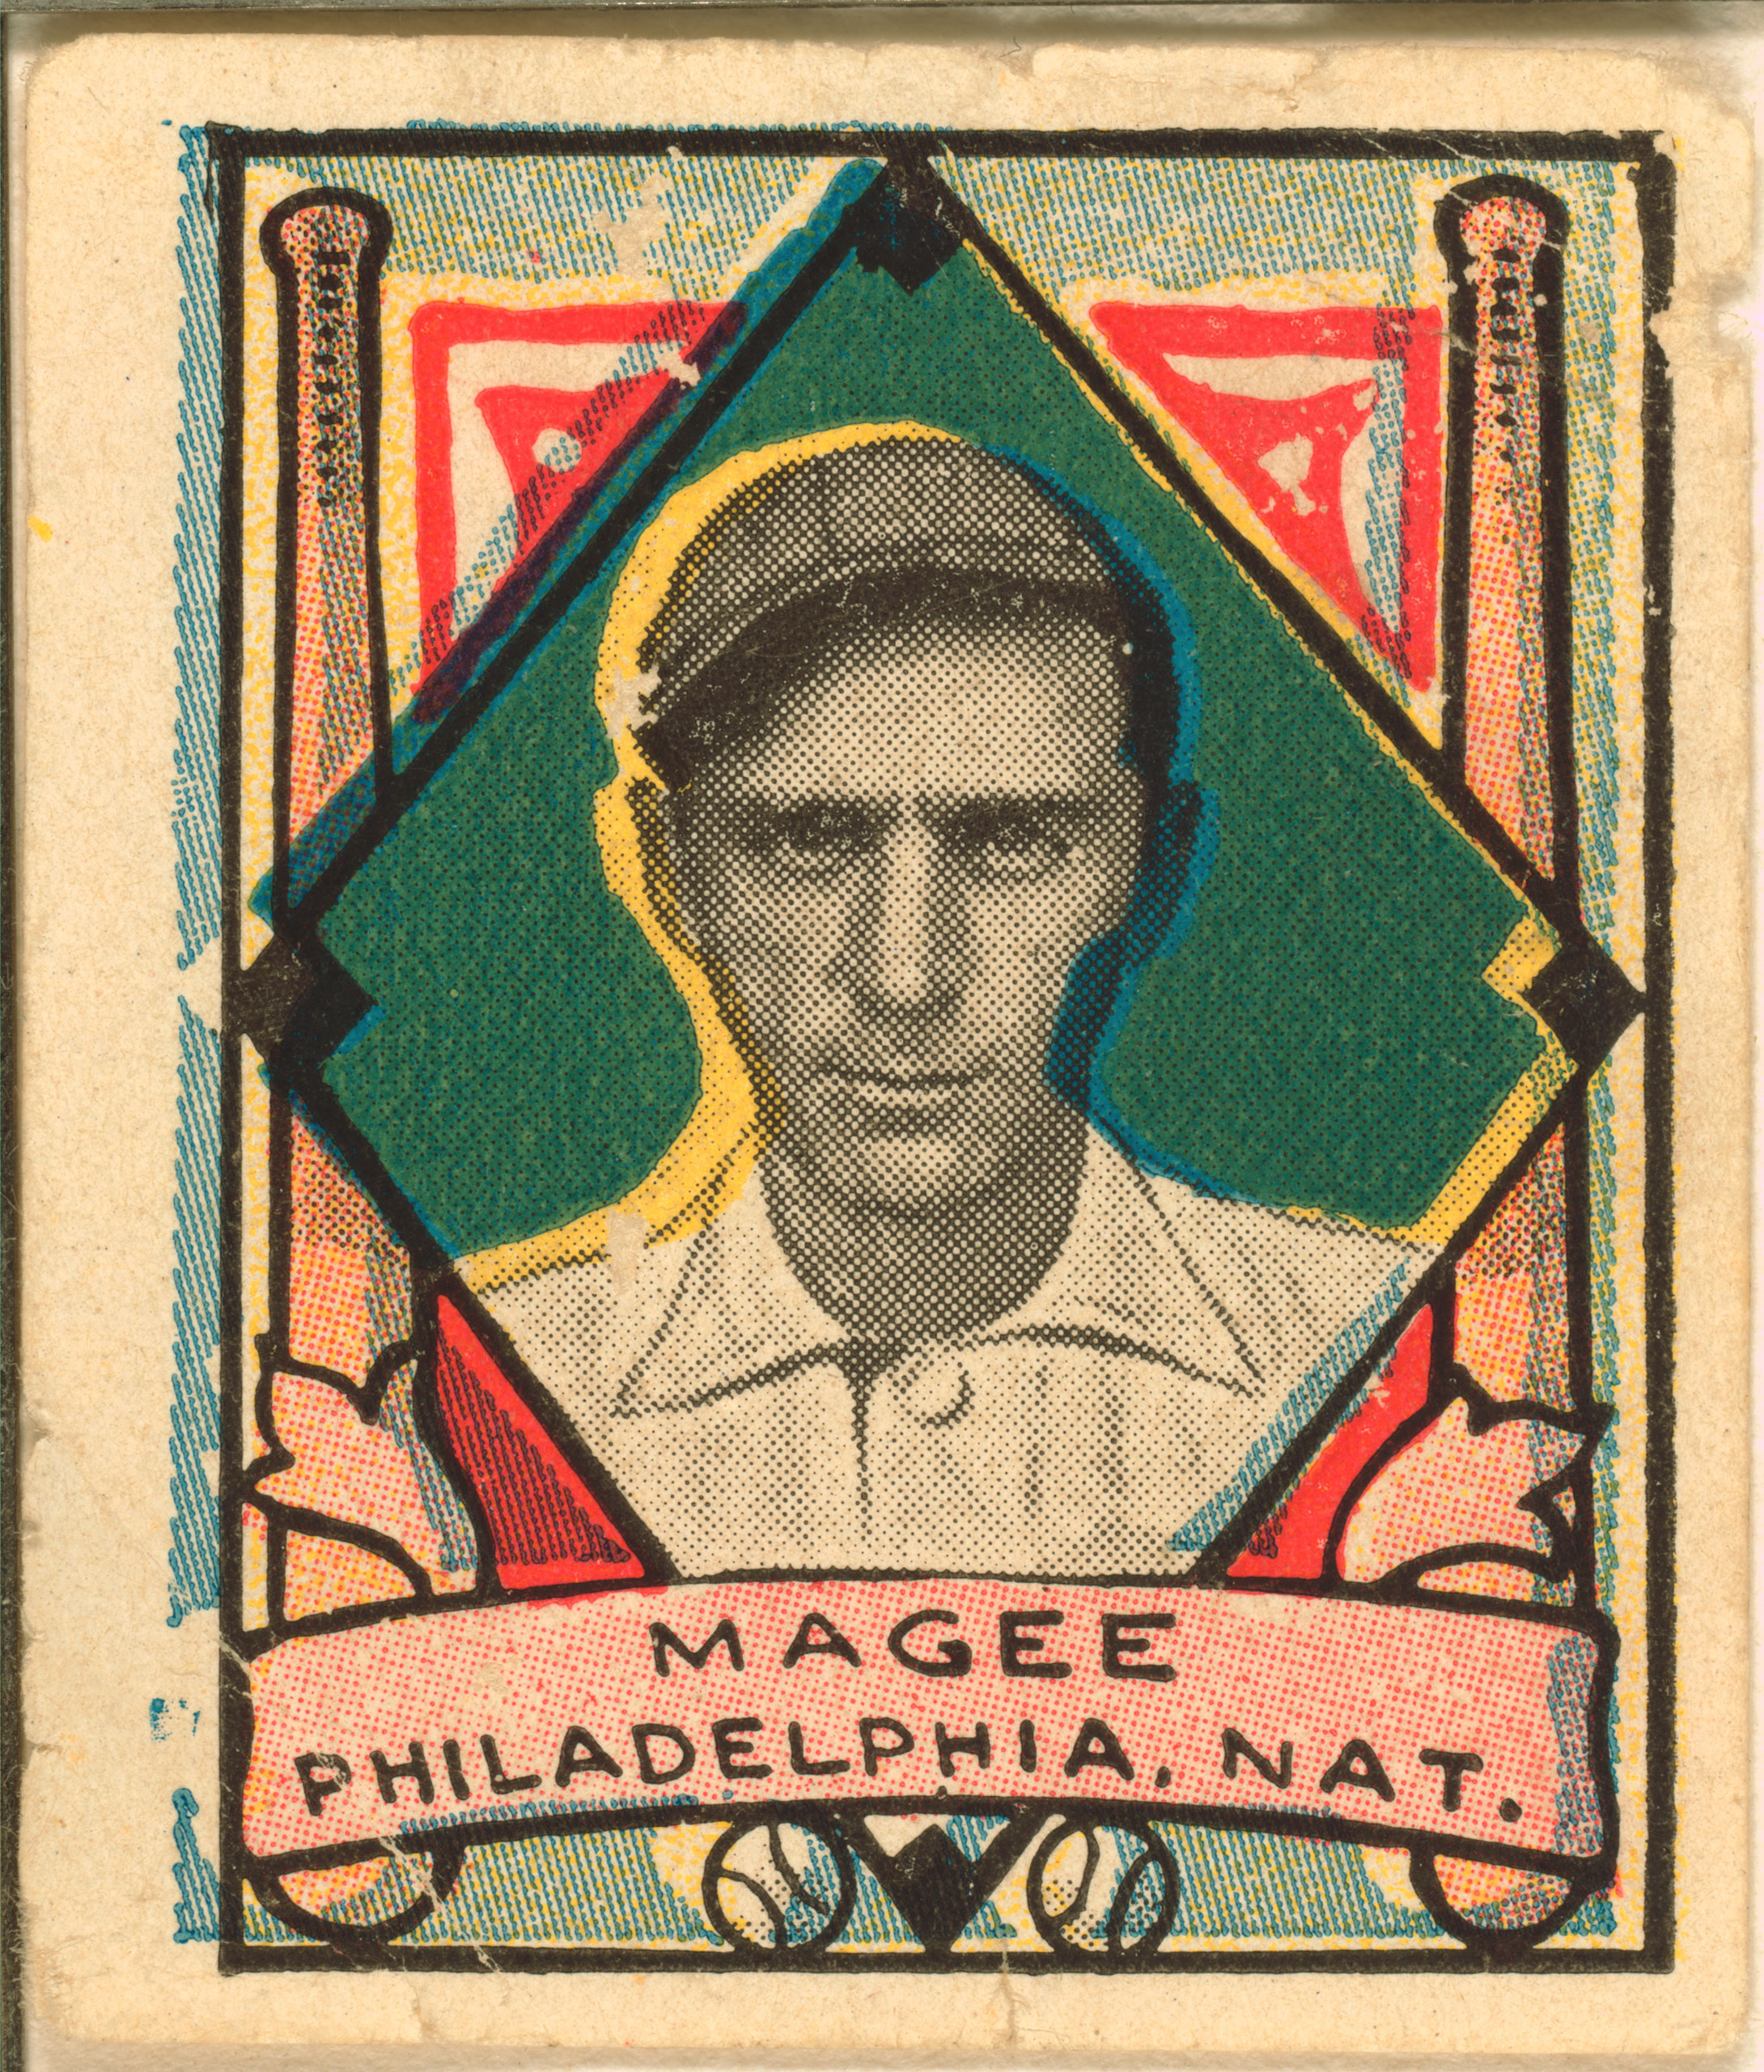 Sherry Magee, Philadelphia Phillies, baseball card, 1911.